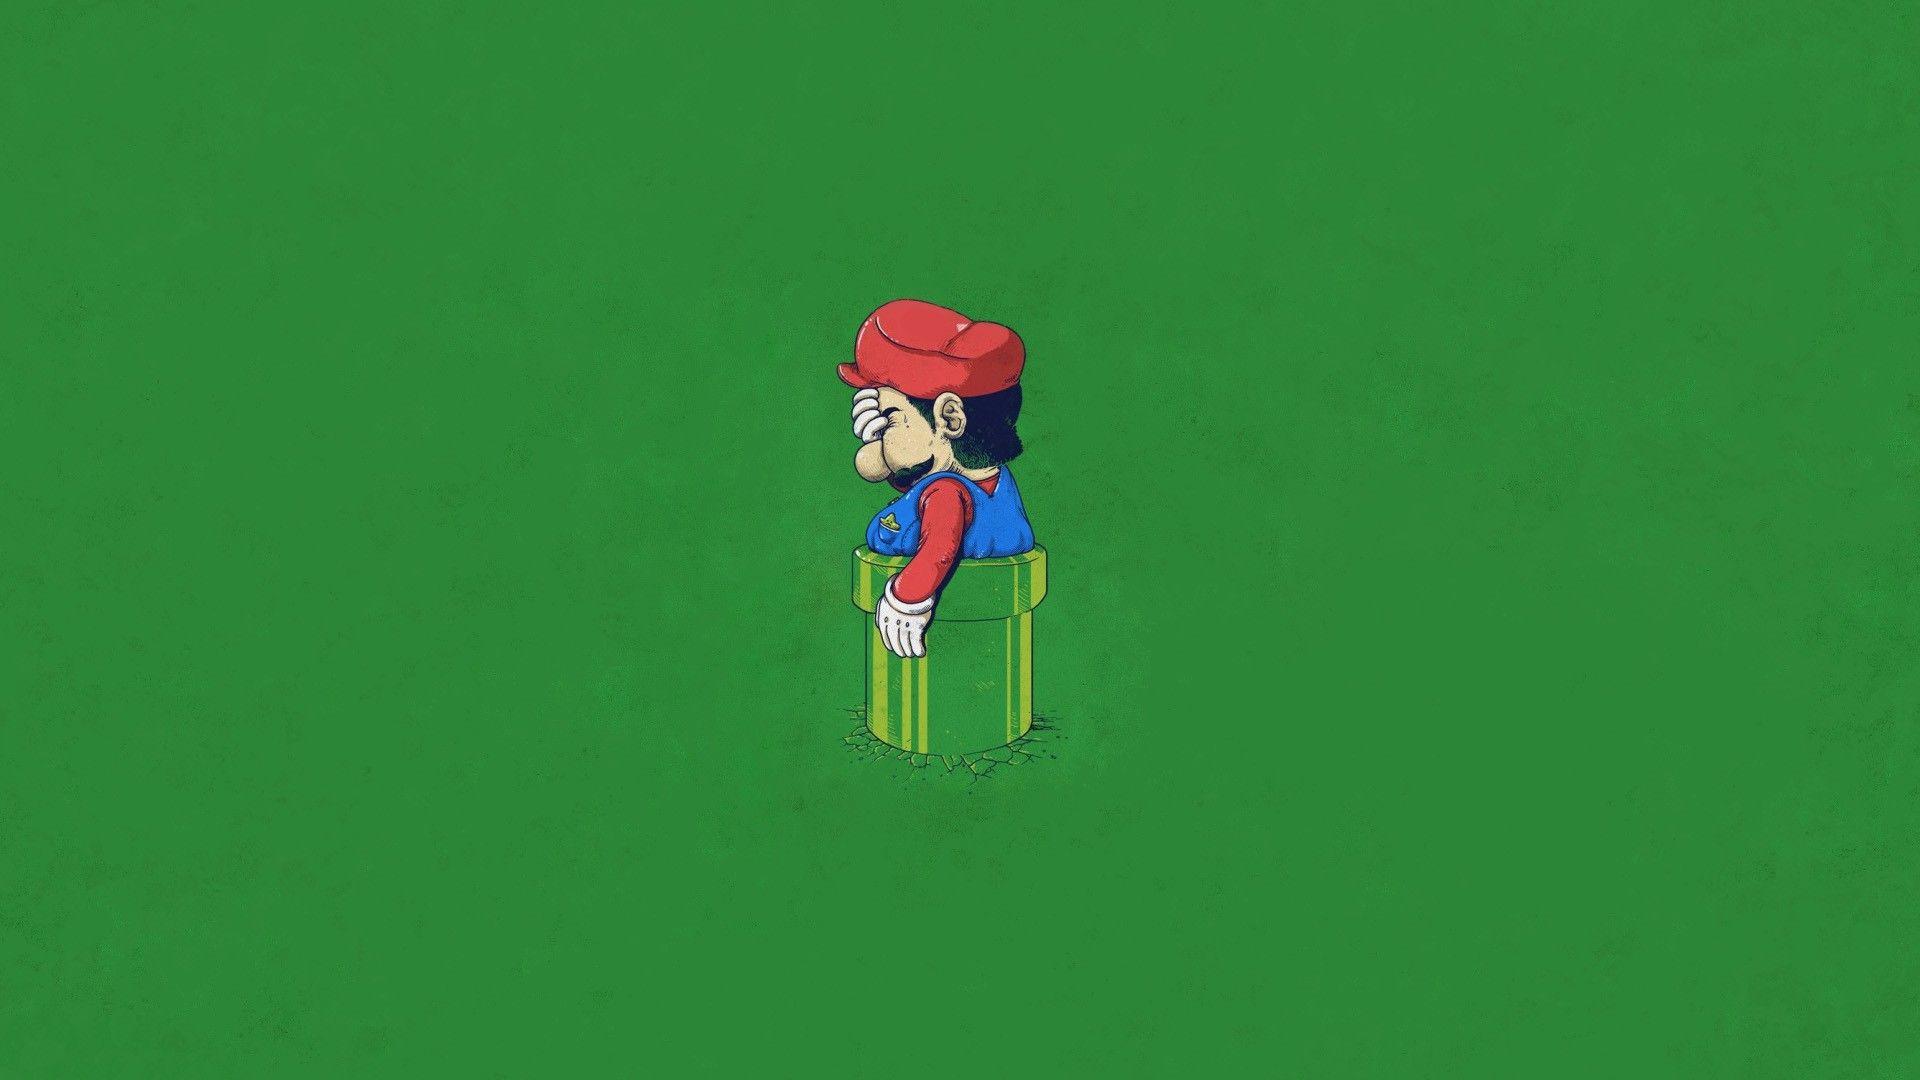 Mario, humor, fat, Super Mario, funny, facepalm, pipes, mario rpg, green background, joke, Funny Games wallpaper